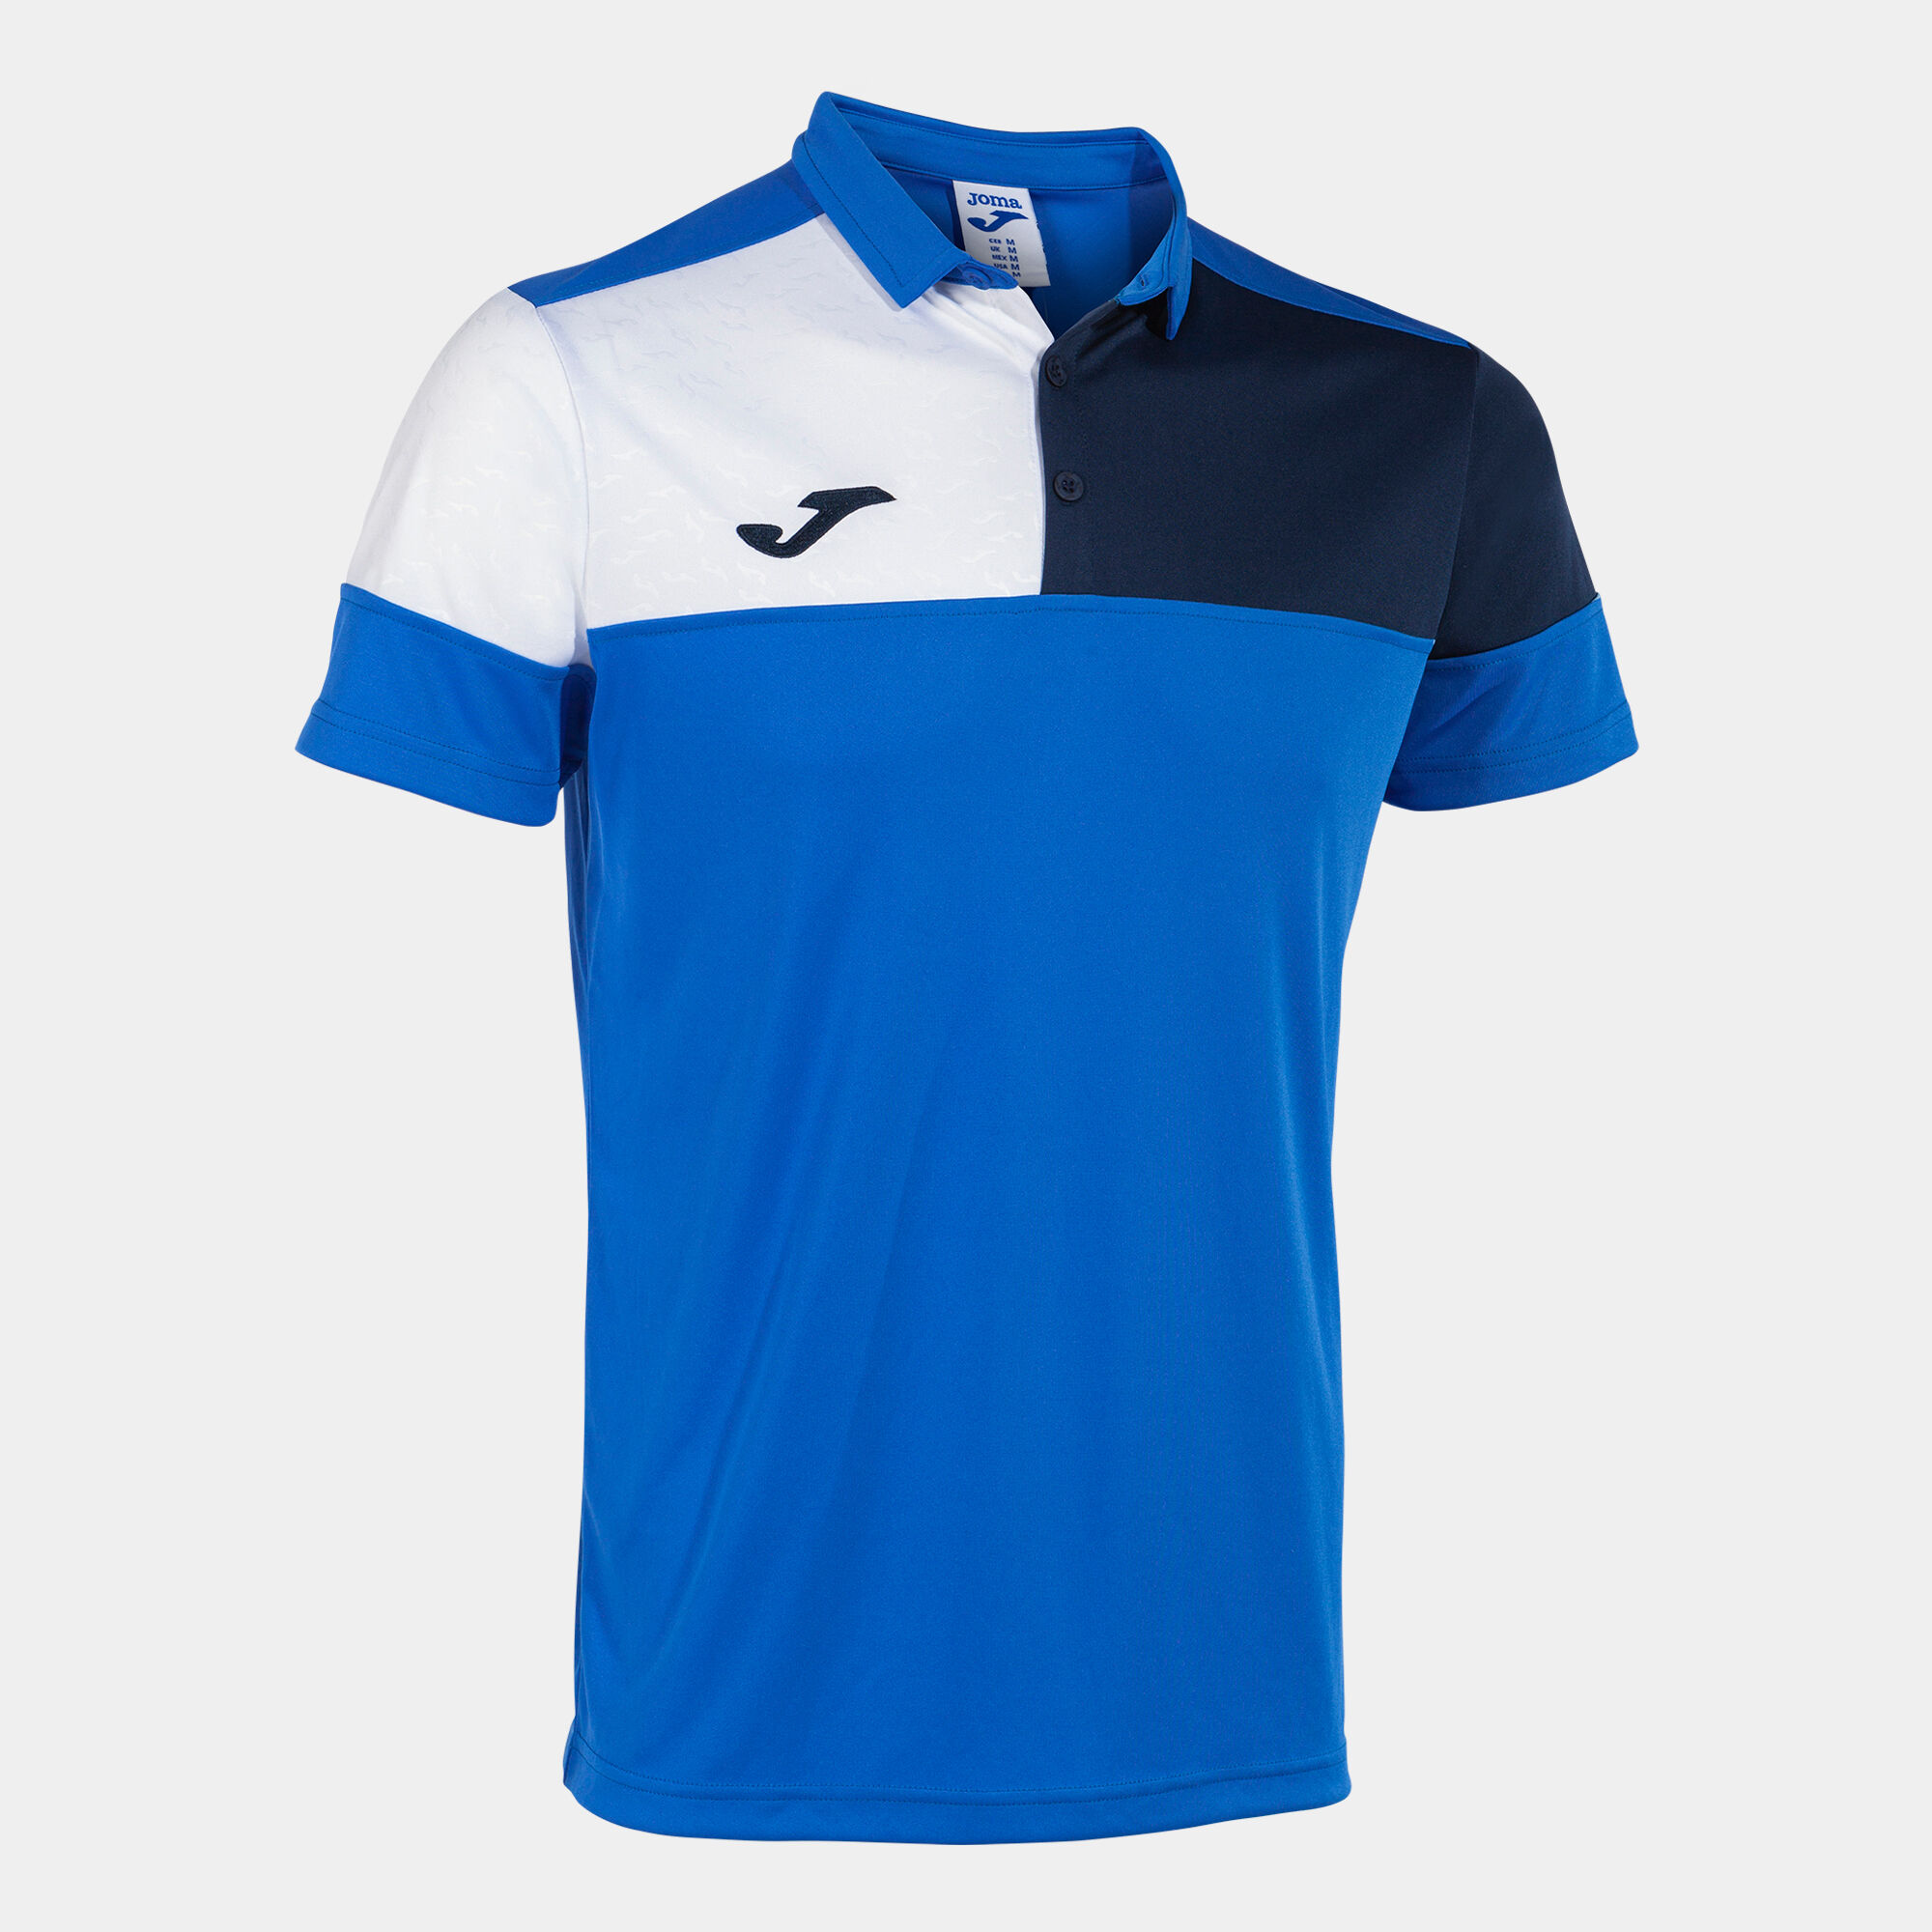 Polo shirt short-sleeve man Crew V royal blue navy blue